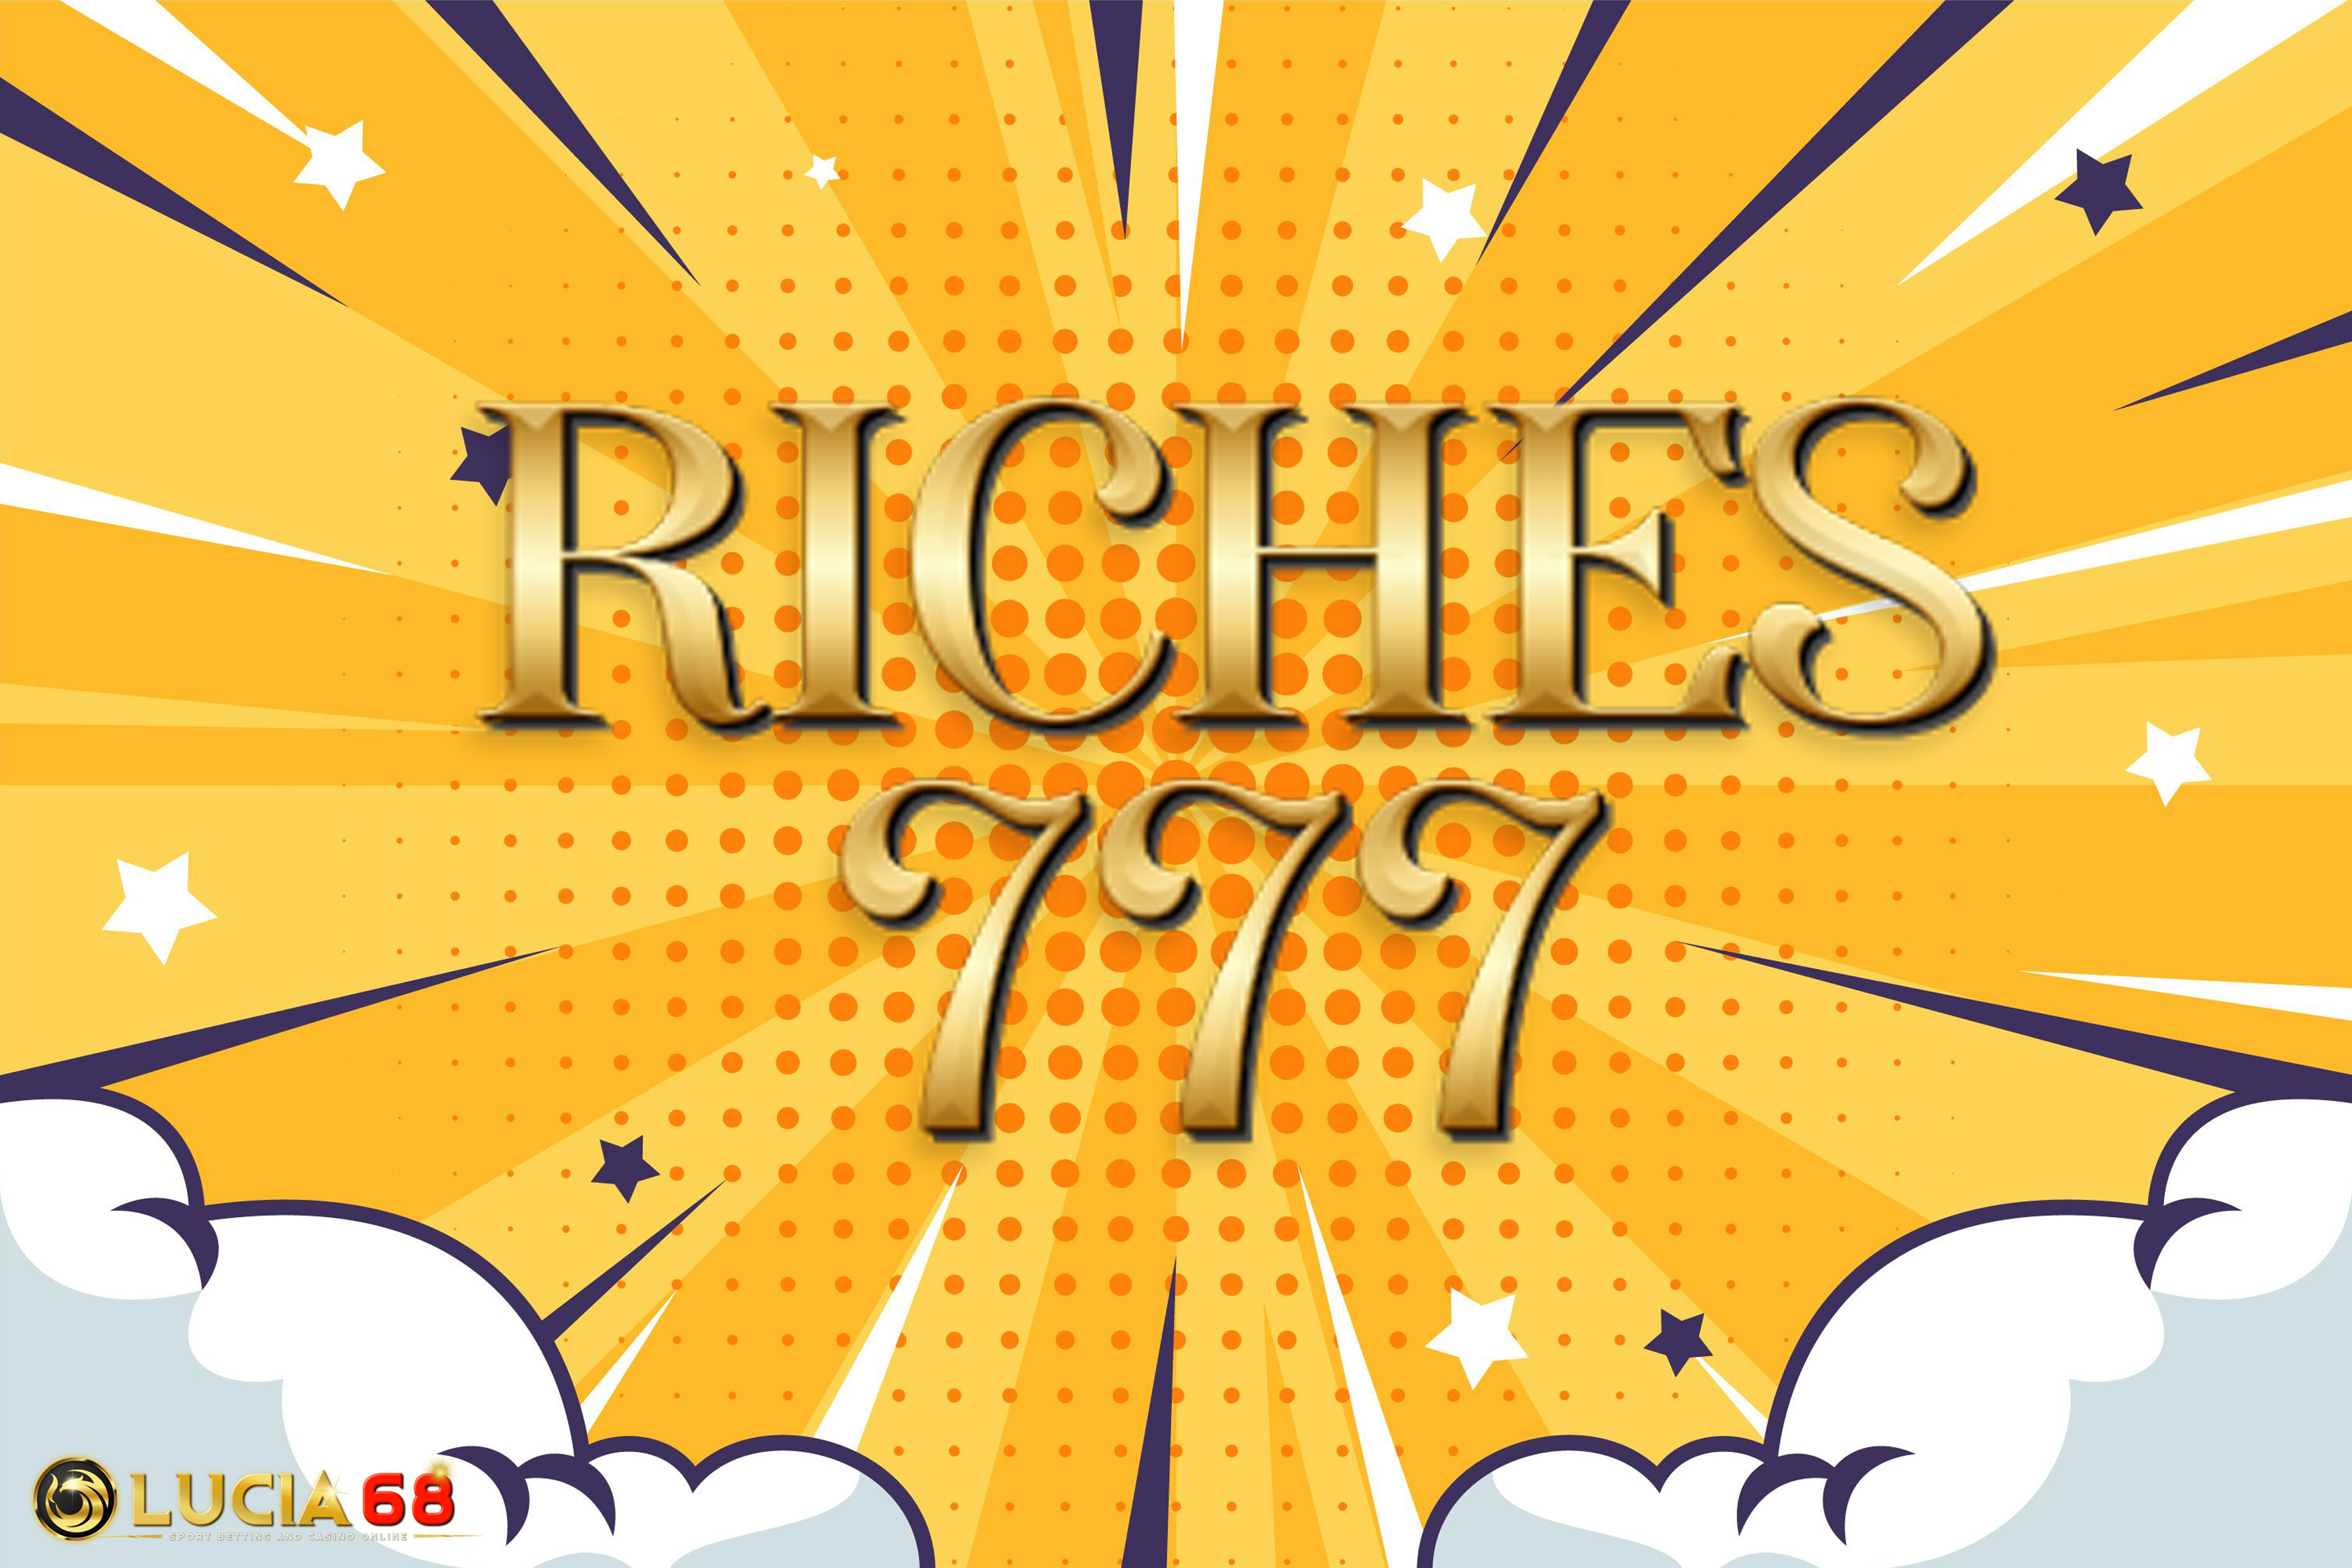 riches777pg